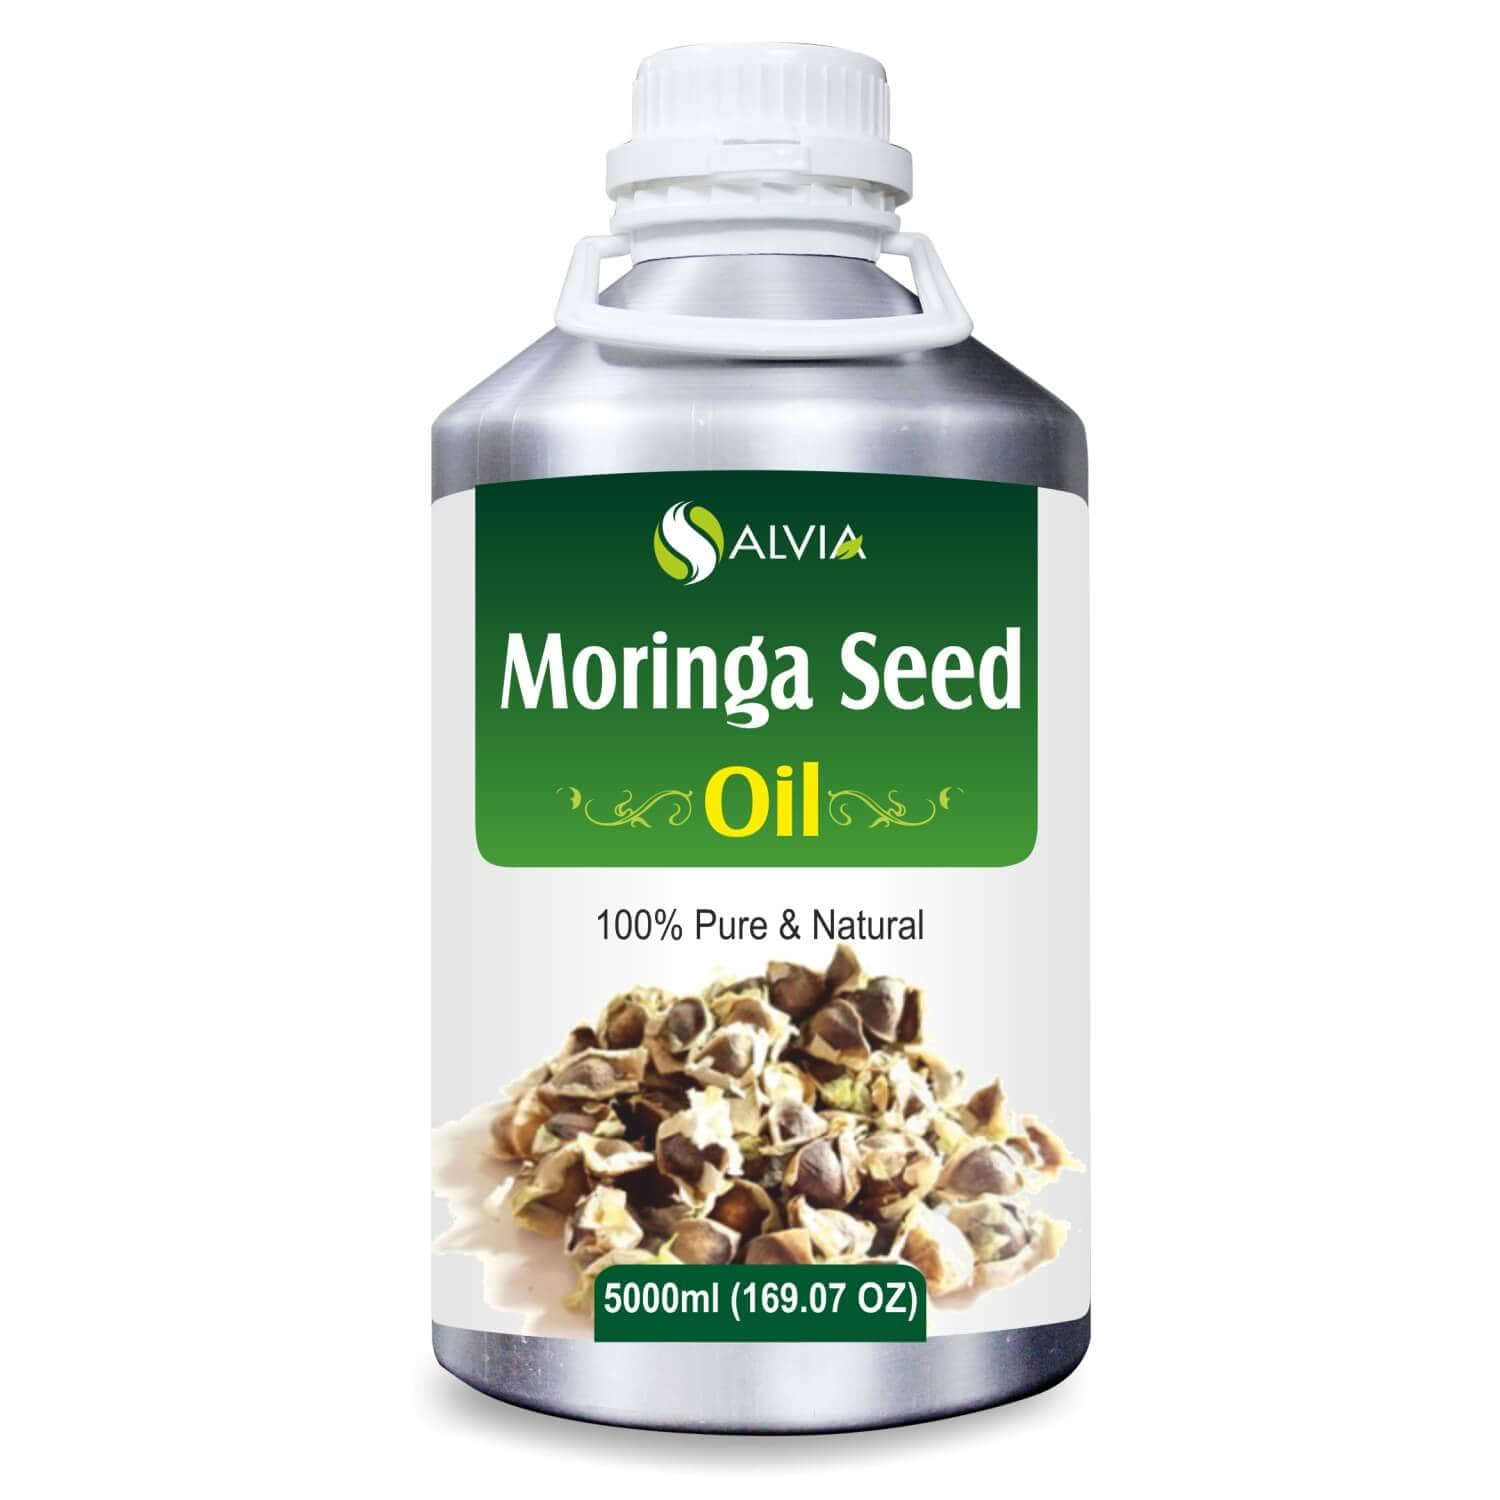 Salvia Natural Carrier Oils 5000ml Moringa Seed Oil (Moringa-Oleifera) 100% Pure & Natural Carrier Oil Rejuvenates skin, Body, Skin & Hair Care, Healing Properties